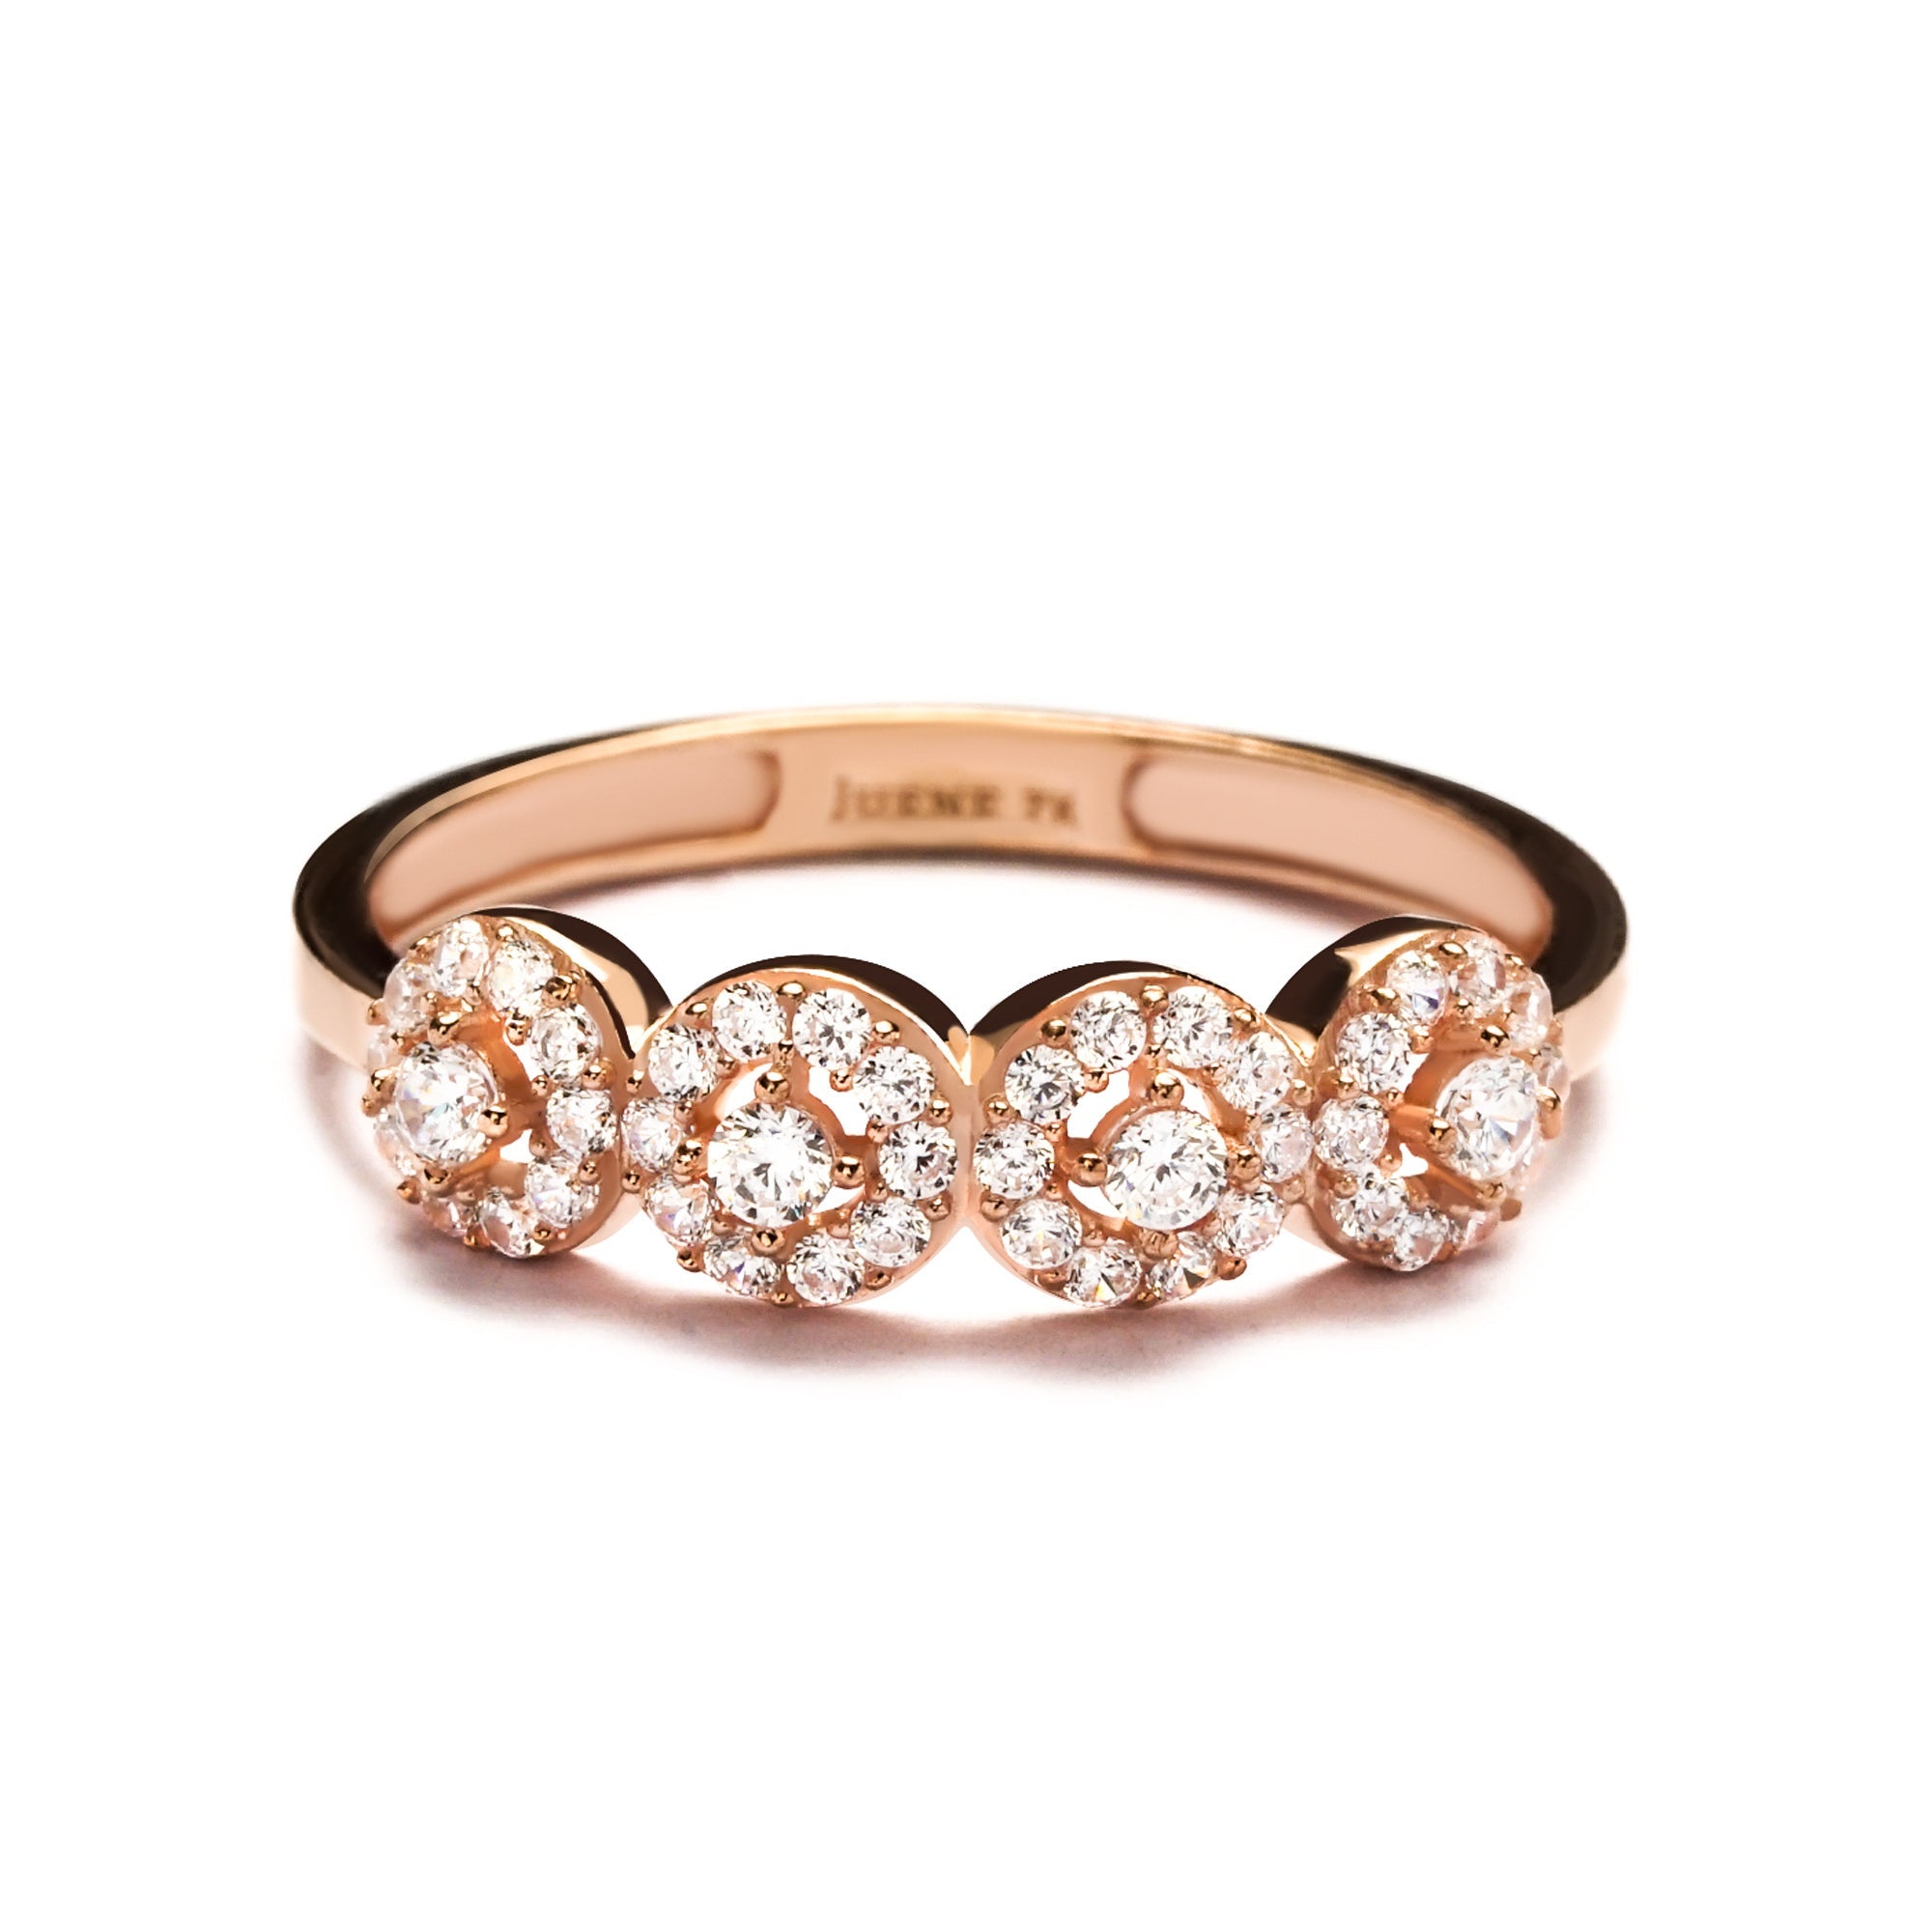 Cassandra Gold Ring - Radiance - Juene Jewelry